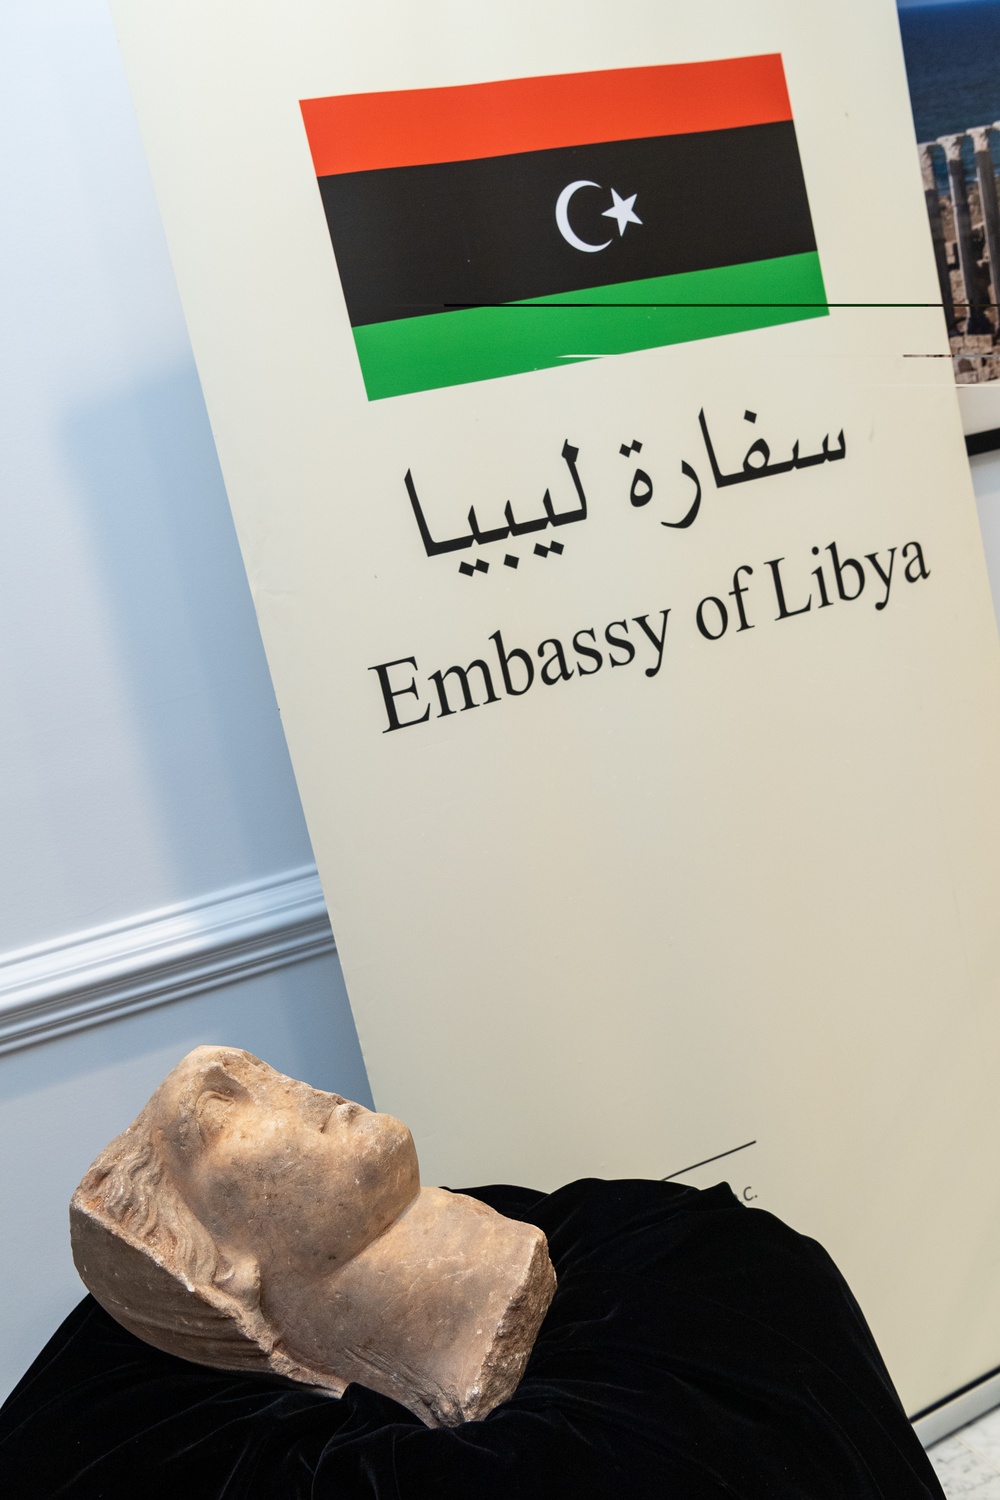 ICE returns sixth century marble statue to Libya